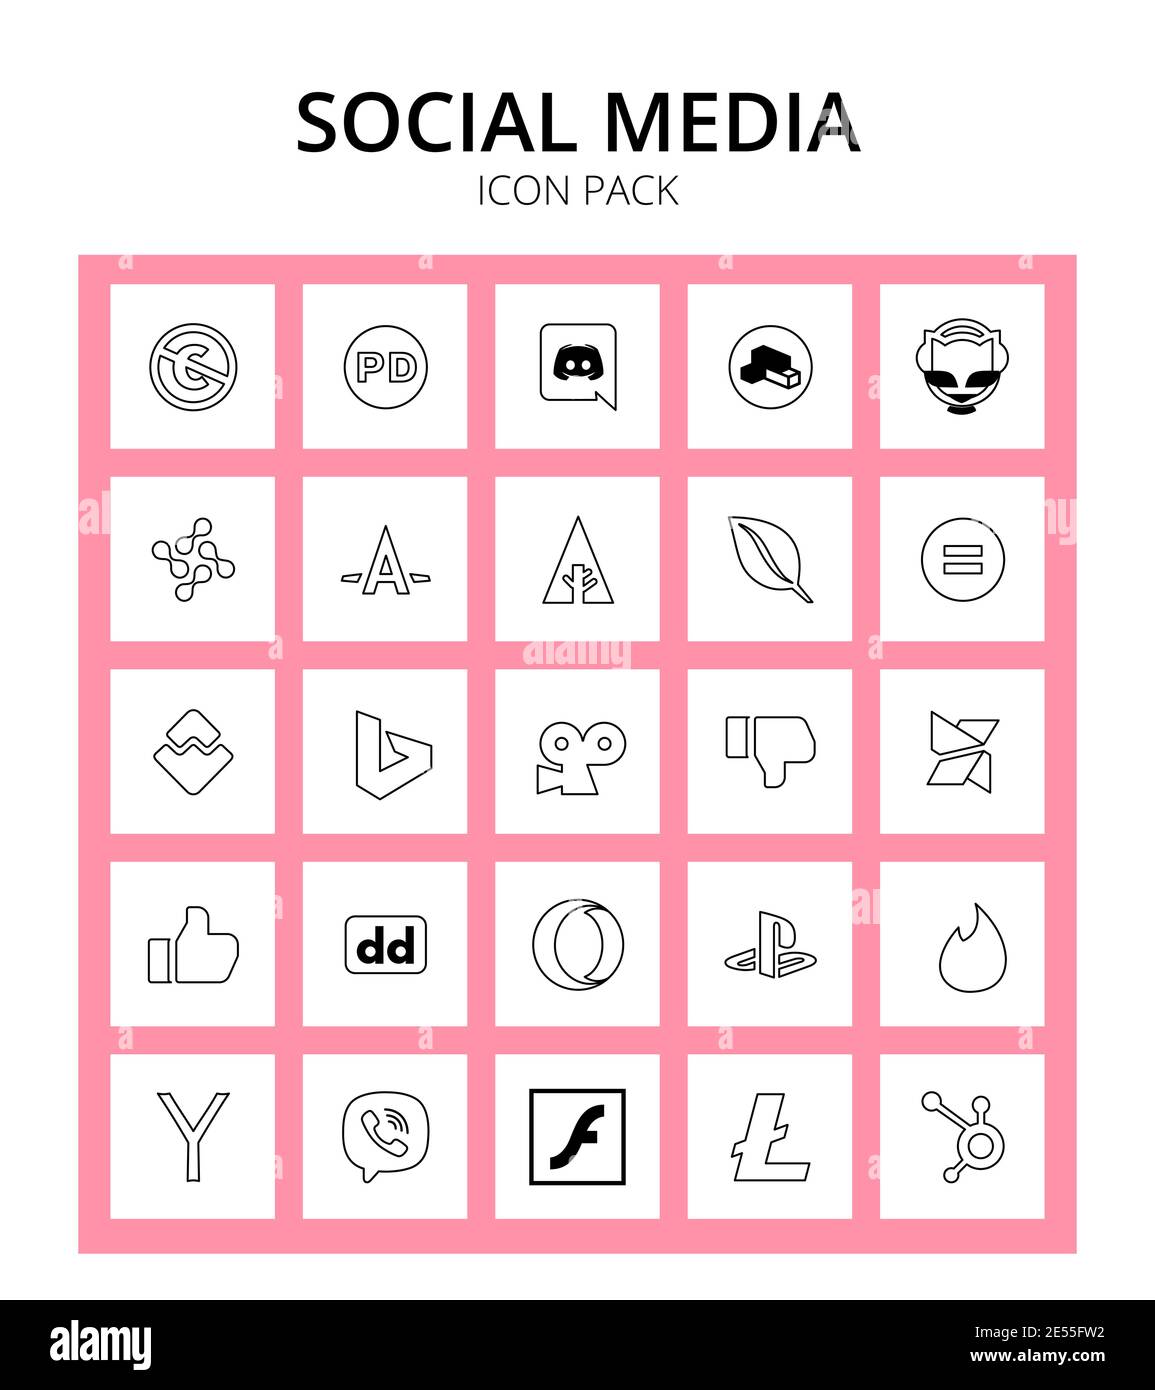 25 Social icon commons, envira, creative, forrst, netko Editable Vector Design Elements Stock Vector